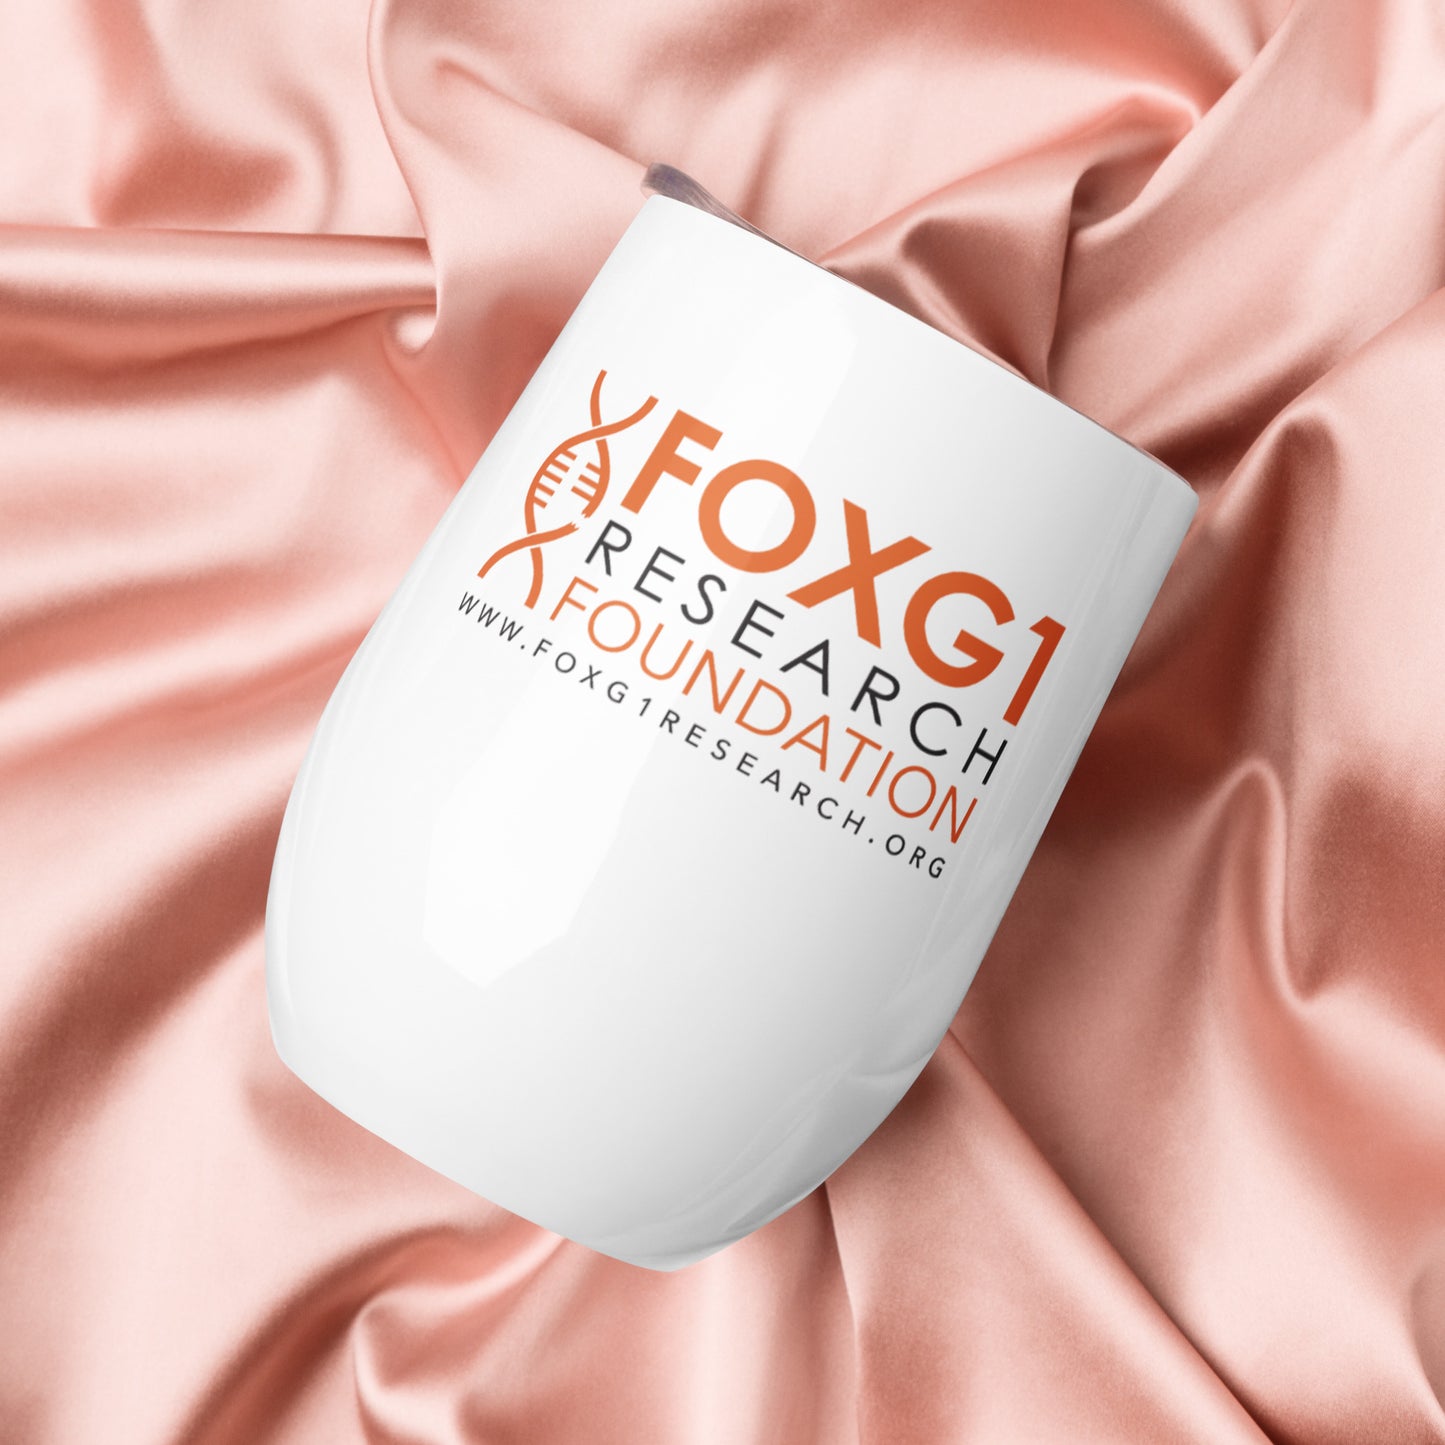 FOXG1 Foundation Wine Tumbler - White